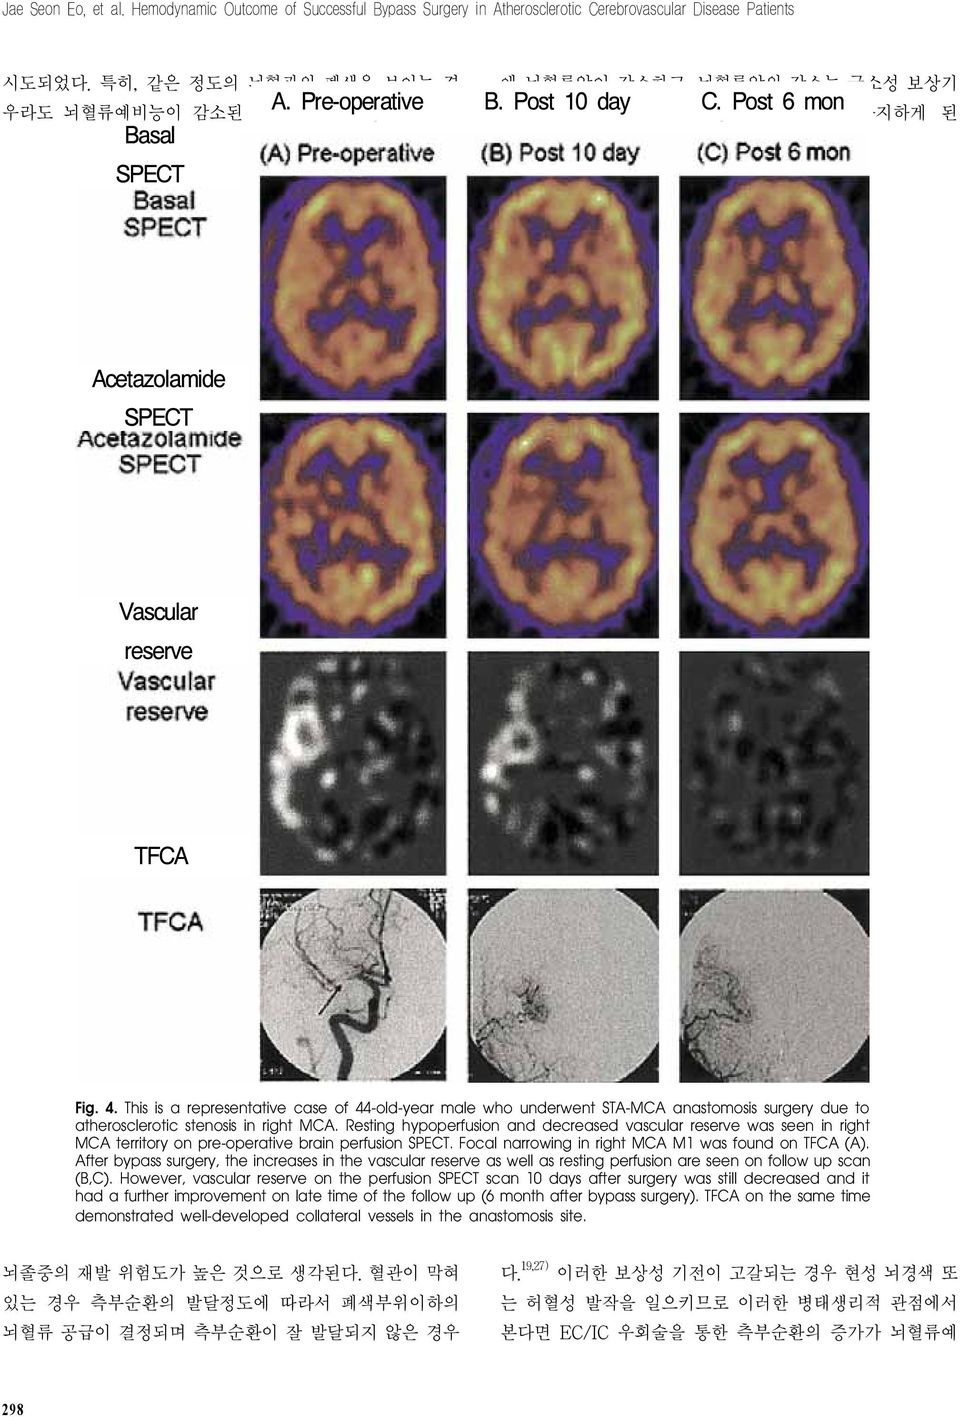 Post 6 mon 전에 의하여 뇌혈관을 확장시켜 뇌혈류를 유지하게 된 Acetazolamide SPECT Vascular reserve TFCA Fig. 4.